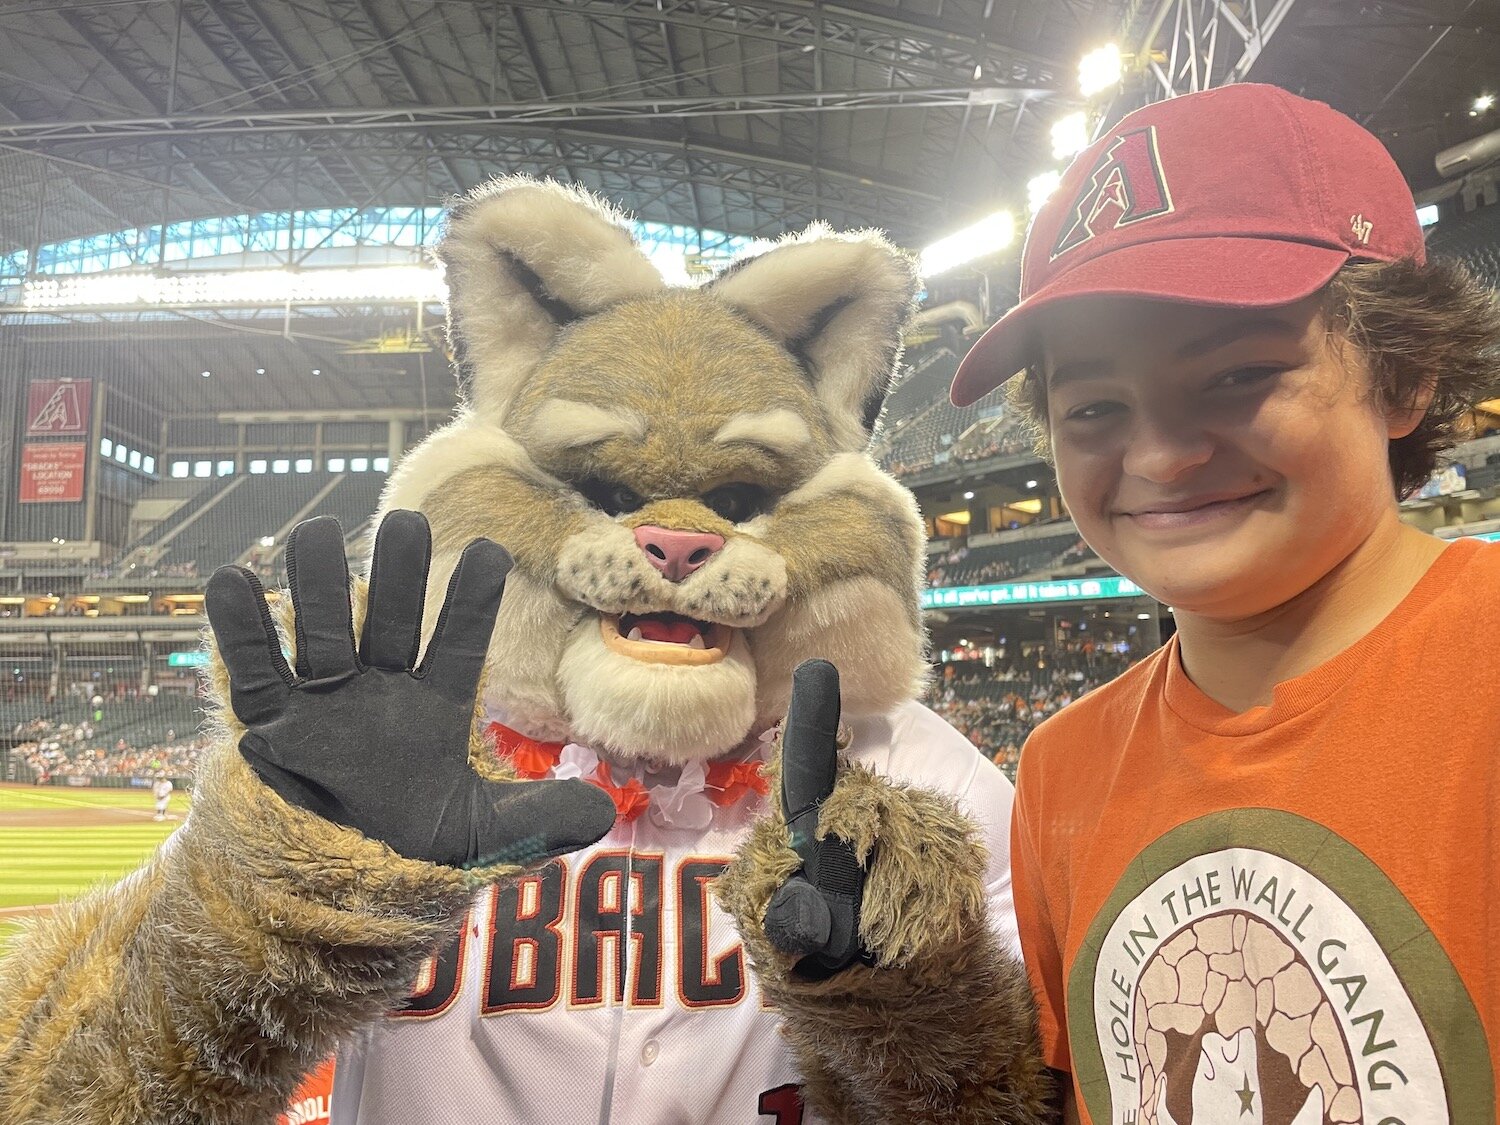 Baxter, the Diamondbacks mascot, congratulates Ollie on his visit to the 6th stadium on his MLB stadium tour